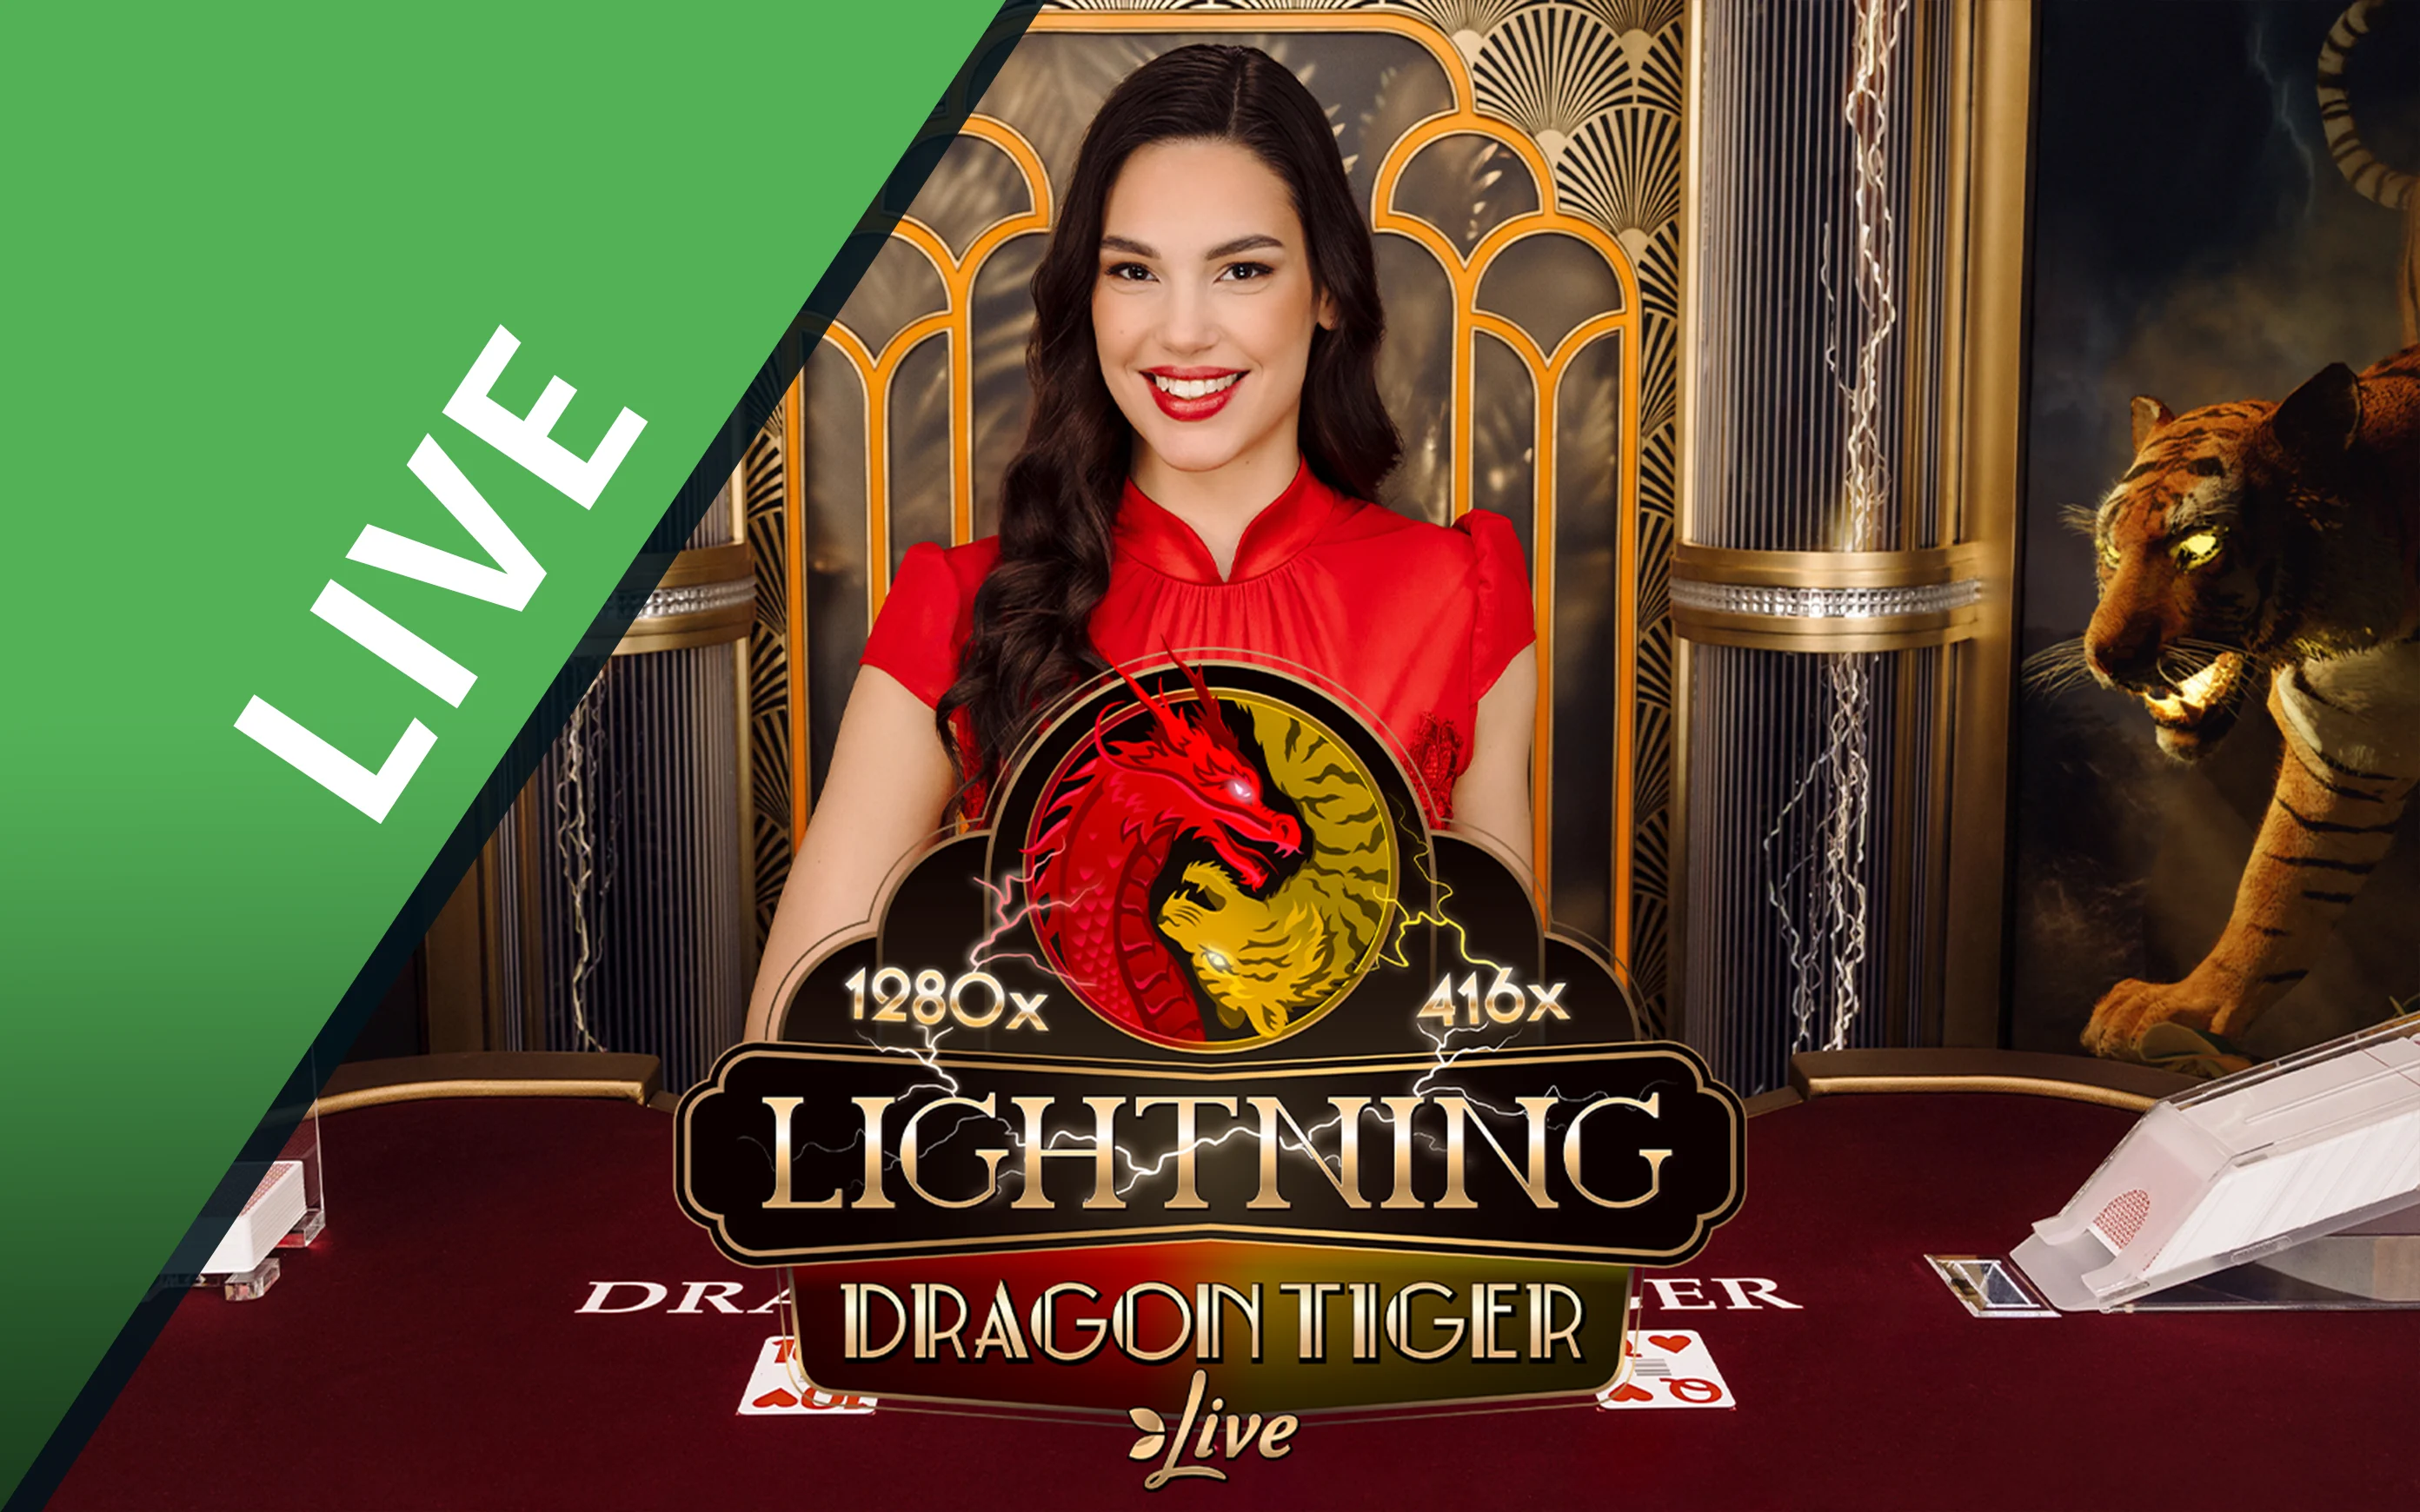 Gioca a Lightning Dragon Tiger sul casino online Starcasino.be